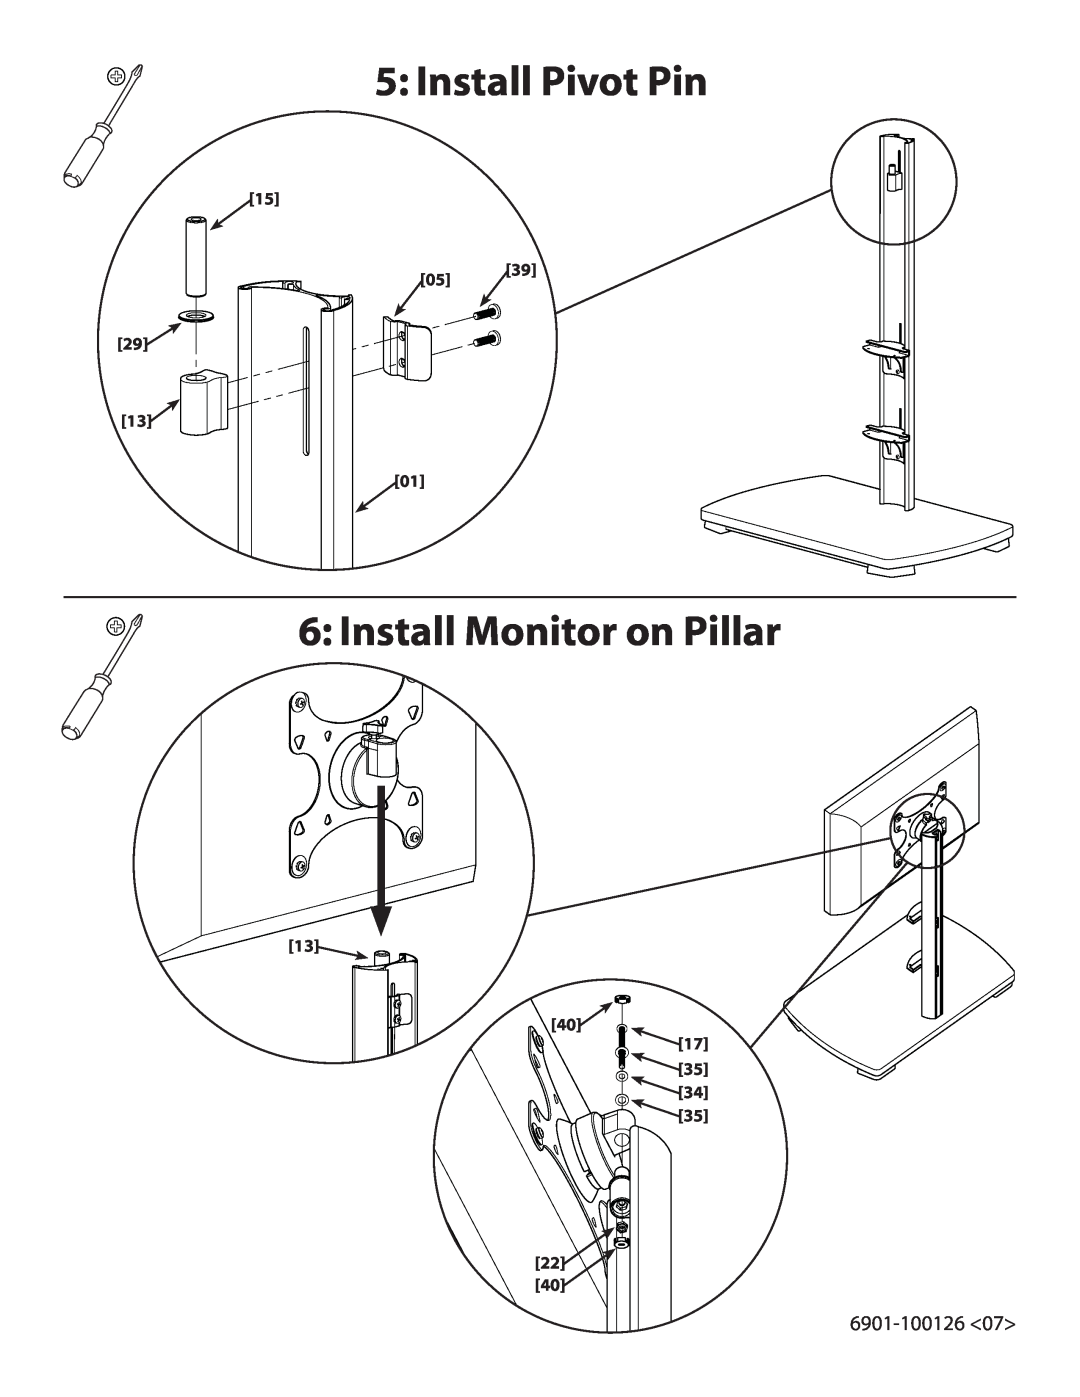 Sanus Systems FFMF2A manual Install Pivot Pin, Install Monitor on Pillar, 6901-100126, 0539, 13 40 17 35 34 